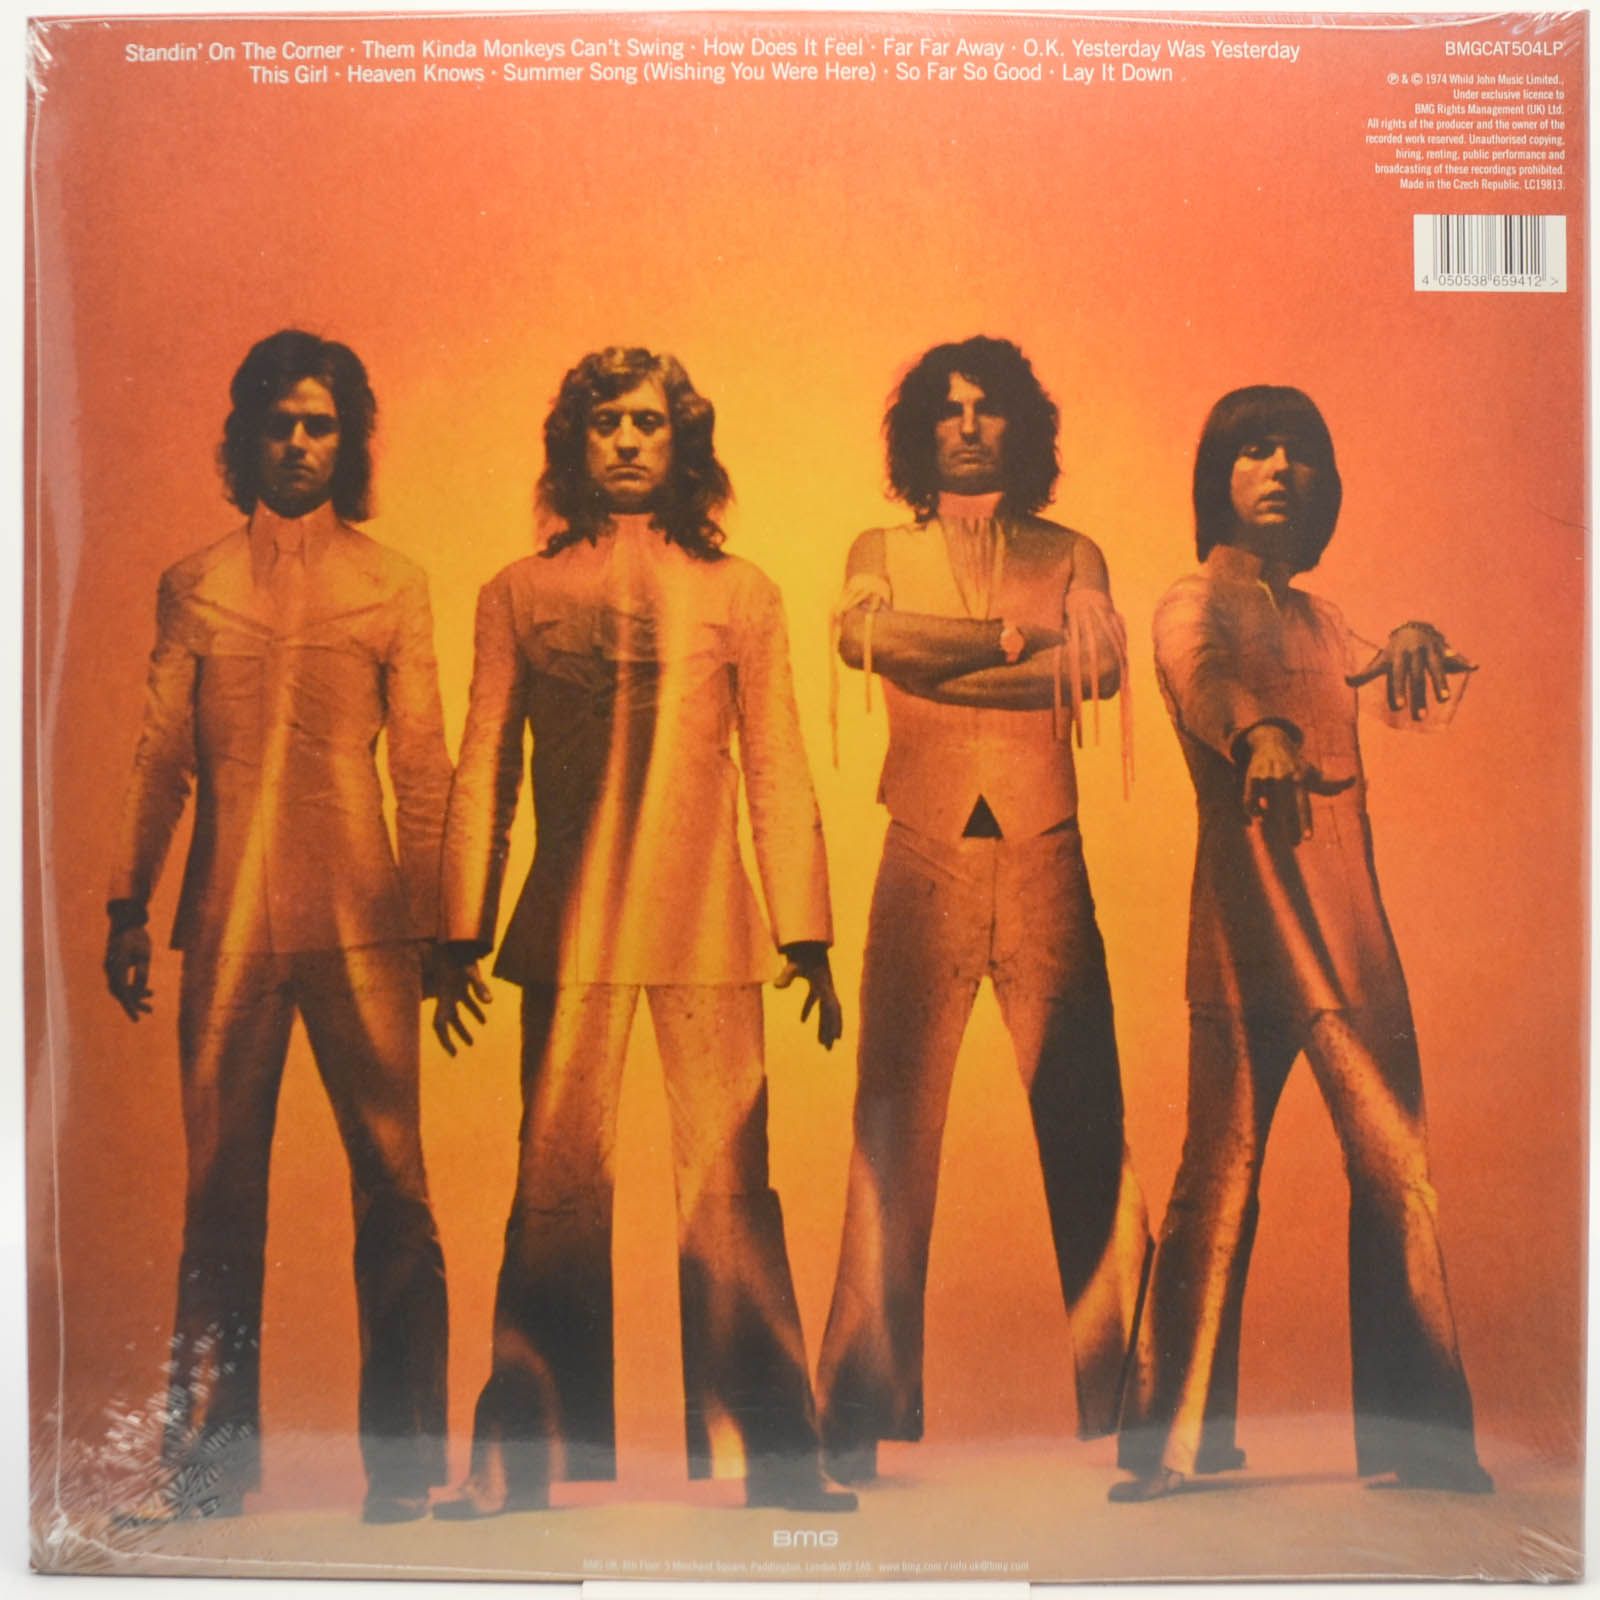 Slade — Slade In Flame, 1974